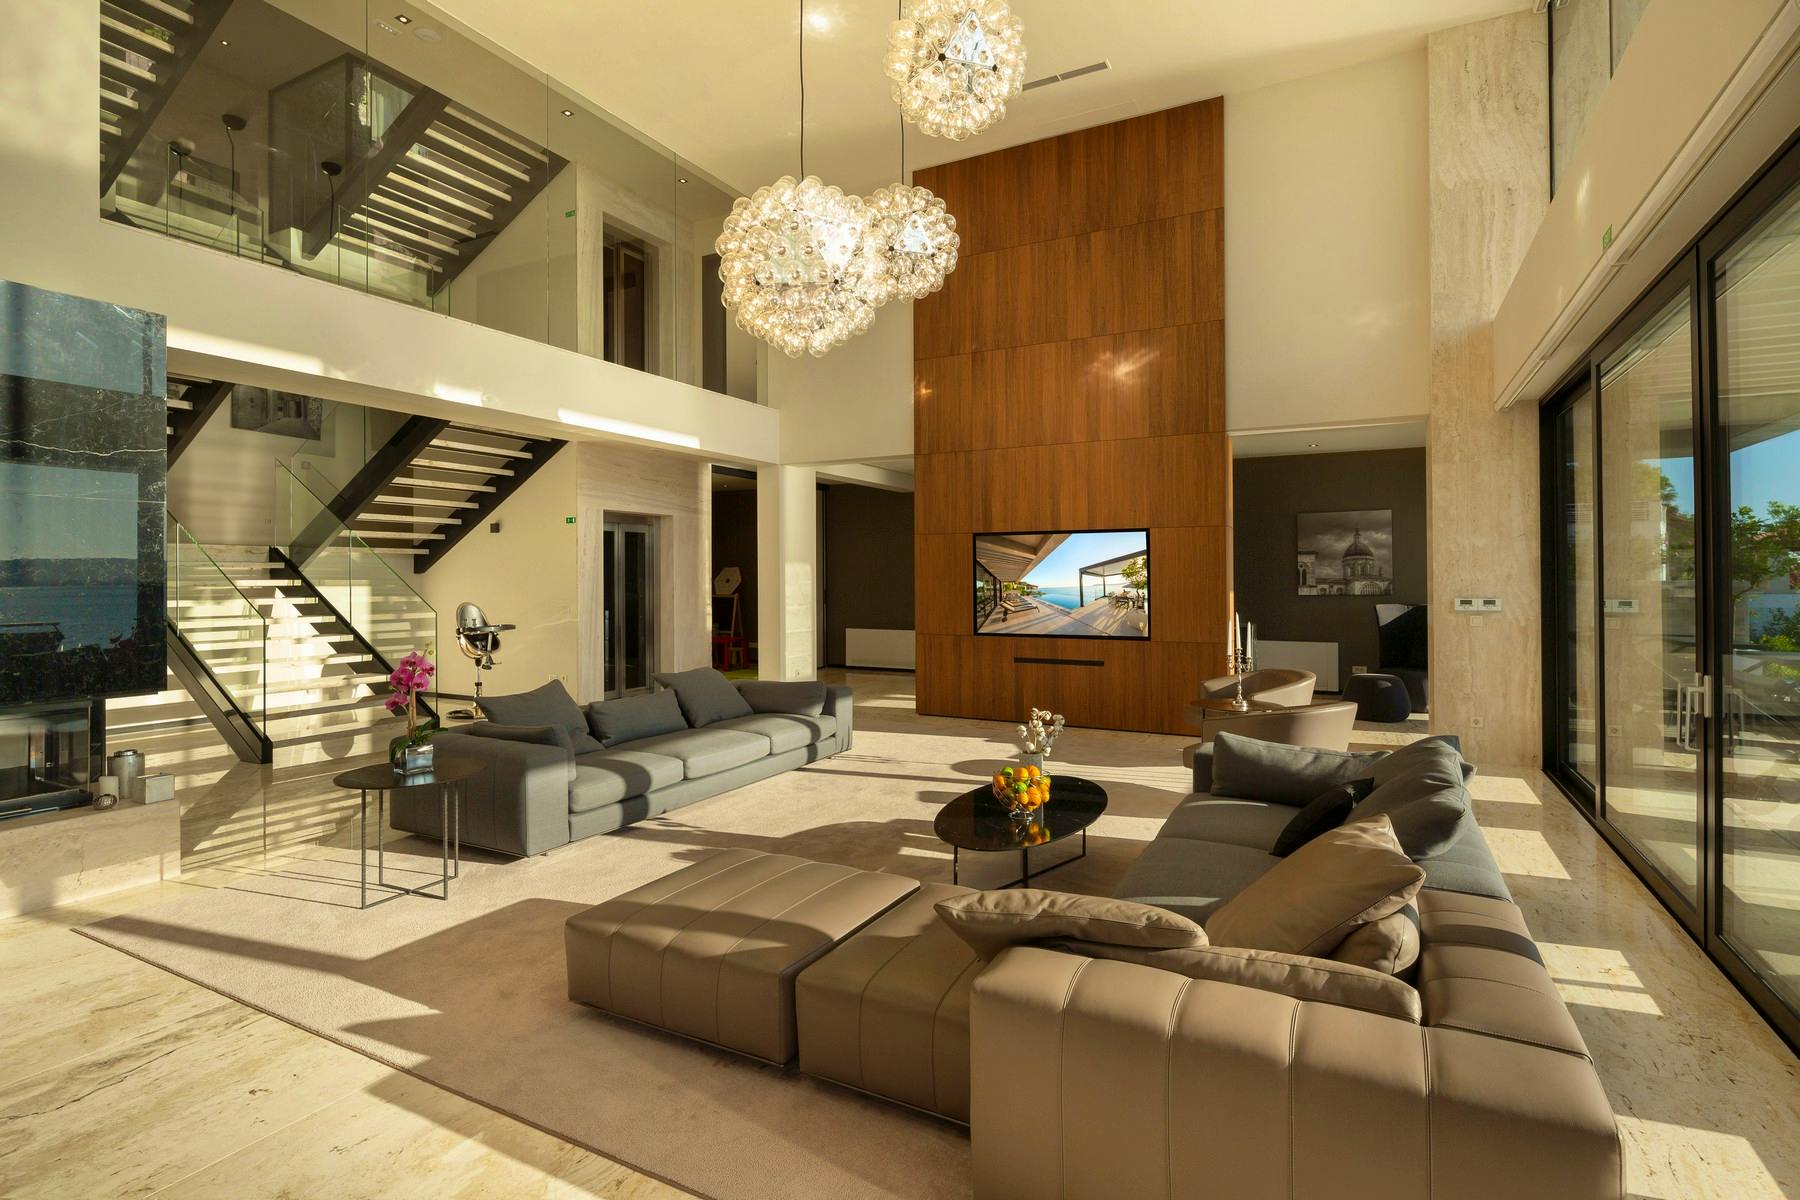 Exclusive interior decor in the living area